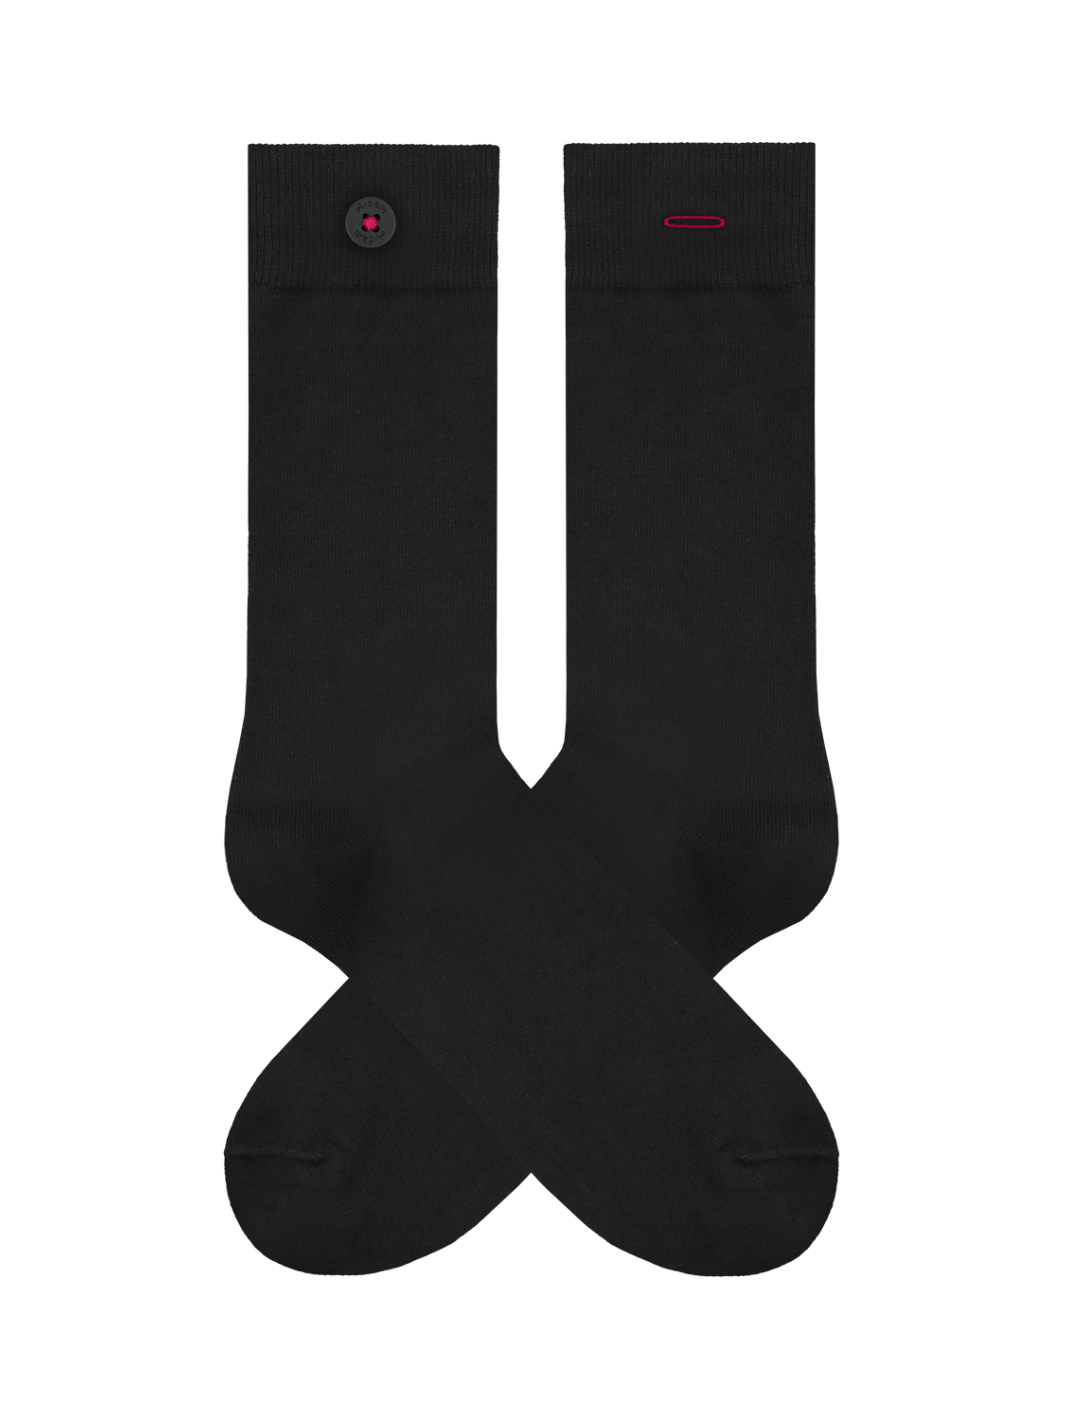 Dámské ponožky z biobavlny v černé barvě ukázaný rozbalený produkt